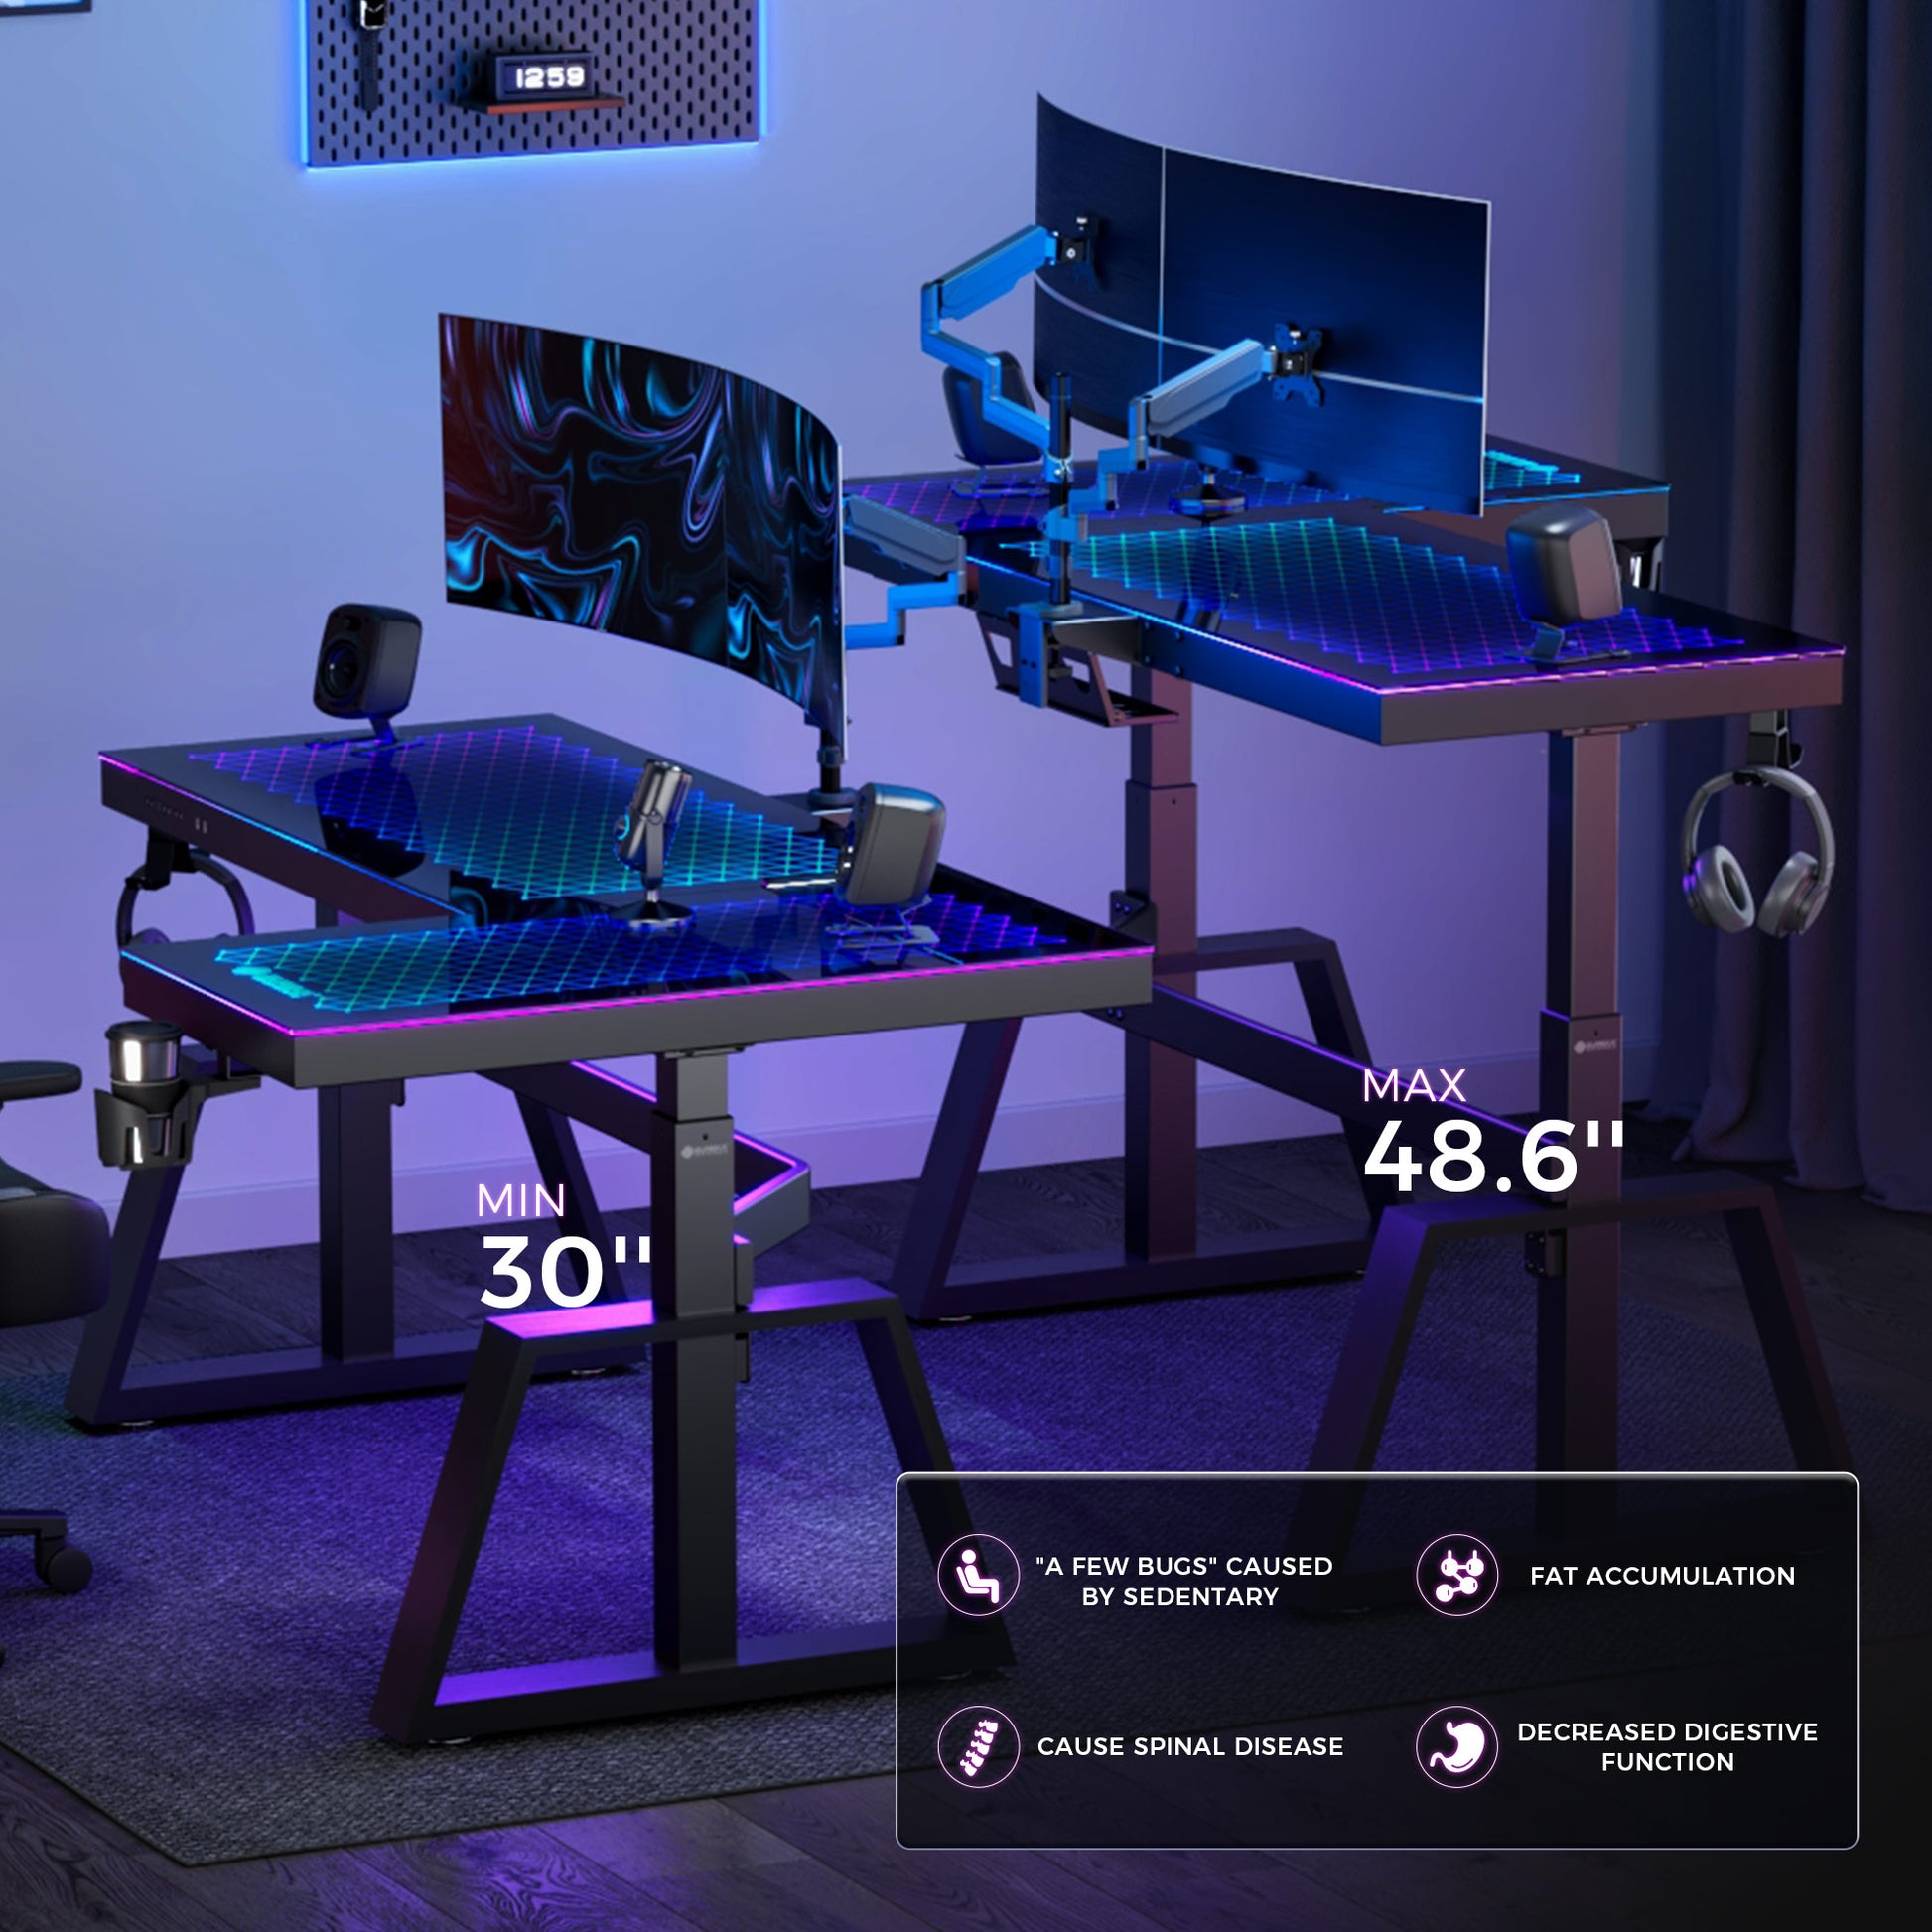 GTG-L60 PRO, L-Shaped Glass Desktop Gaming Standing Desk, Black-colored, Right Sided, RGB Light Up Gaming Desk, Glass Top, Raises from 30 inches to 48.6 inches